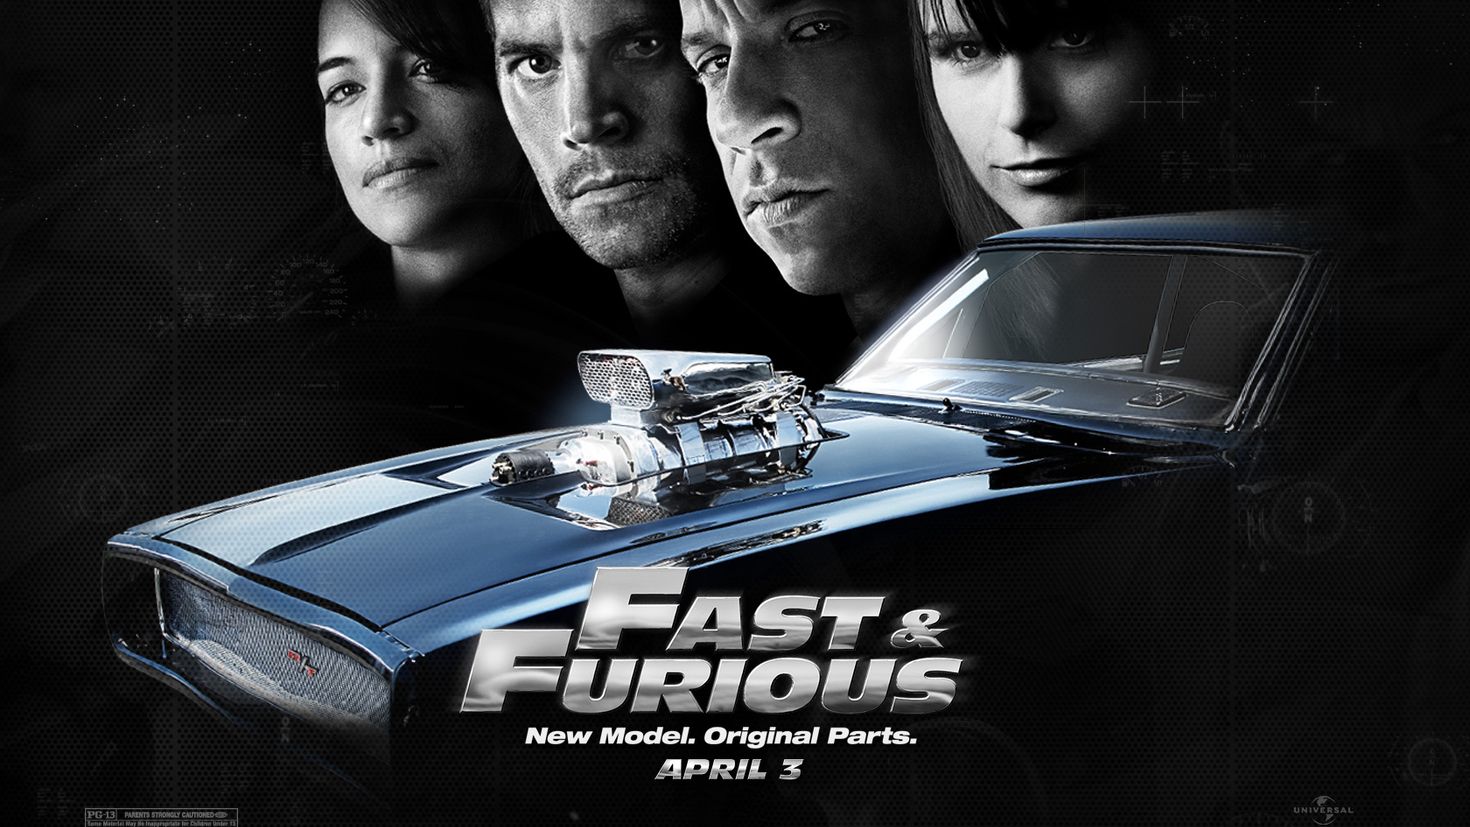 Форсаж на английском название. Форсаж 4 (2009) fast & Furious. Торетто Форсаж 4. Форсаж фаст Фуриос.